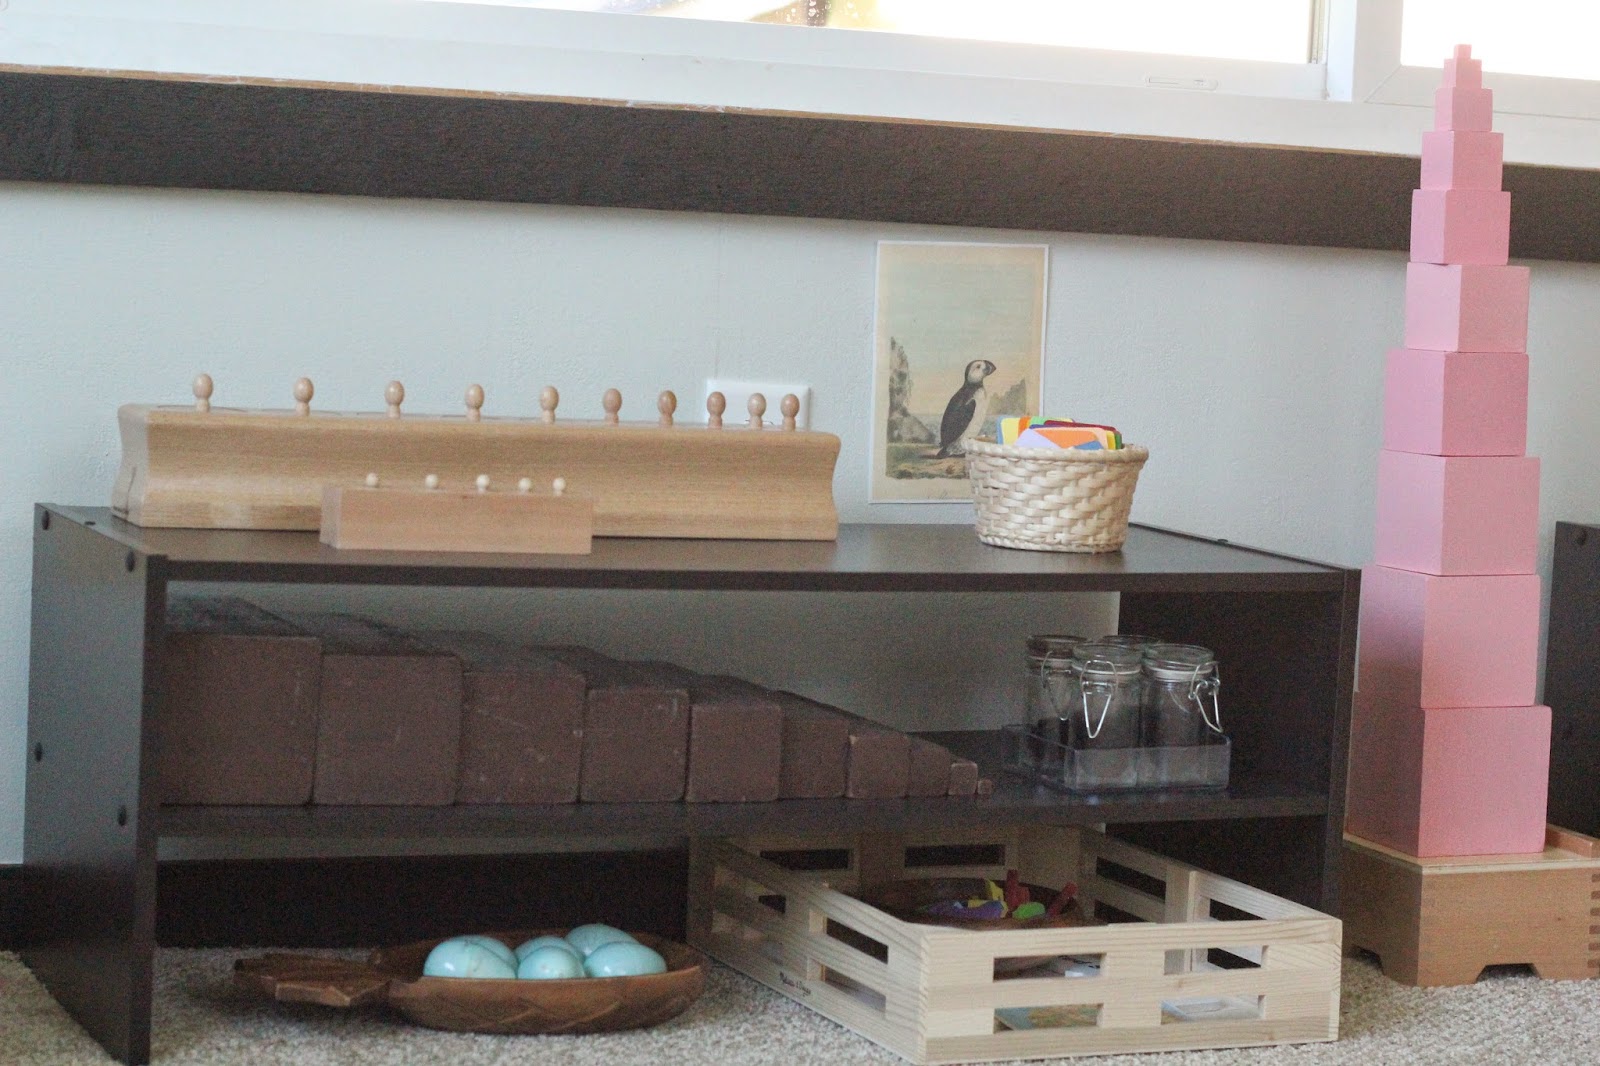 Montessori Sensorial Shelves #30daystoMontessori